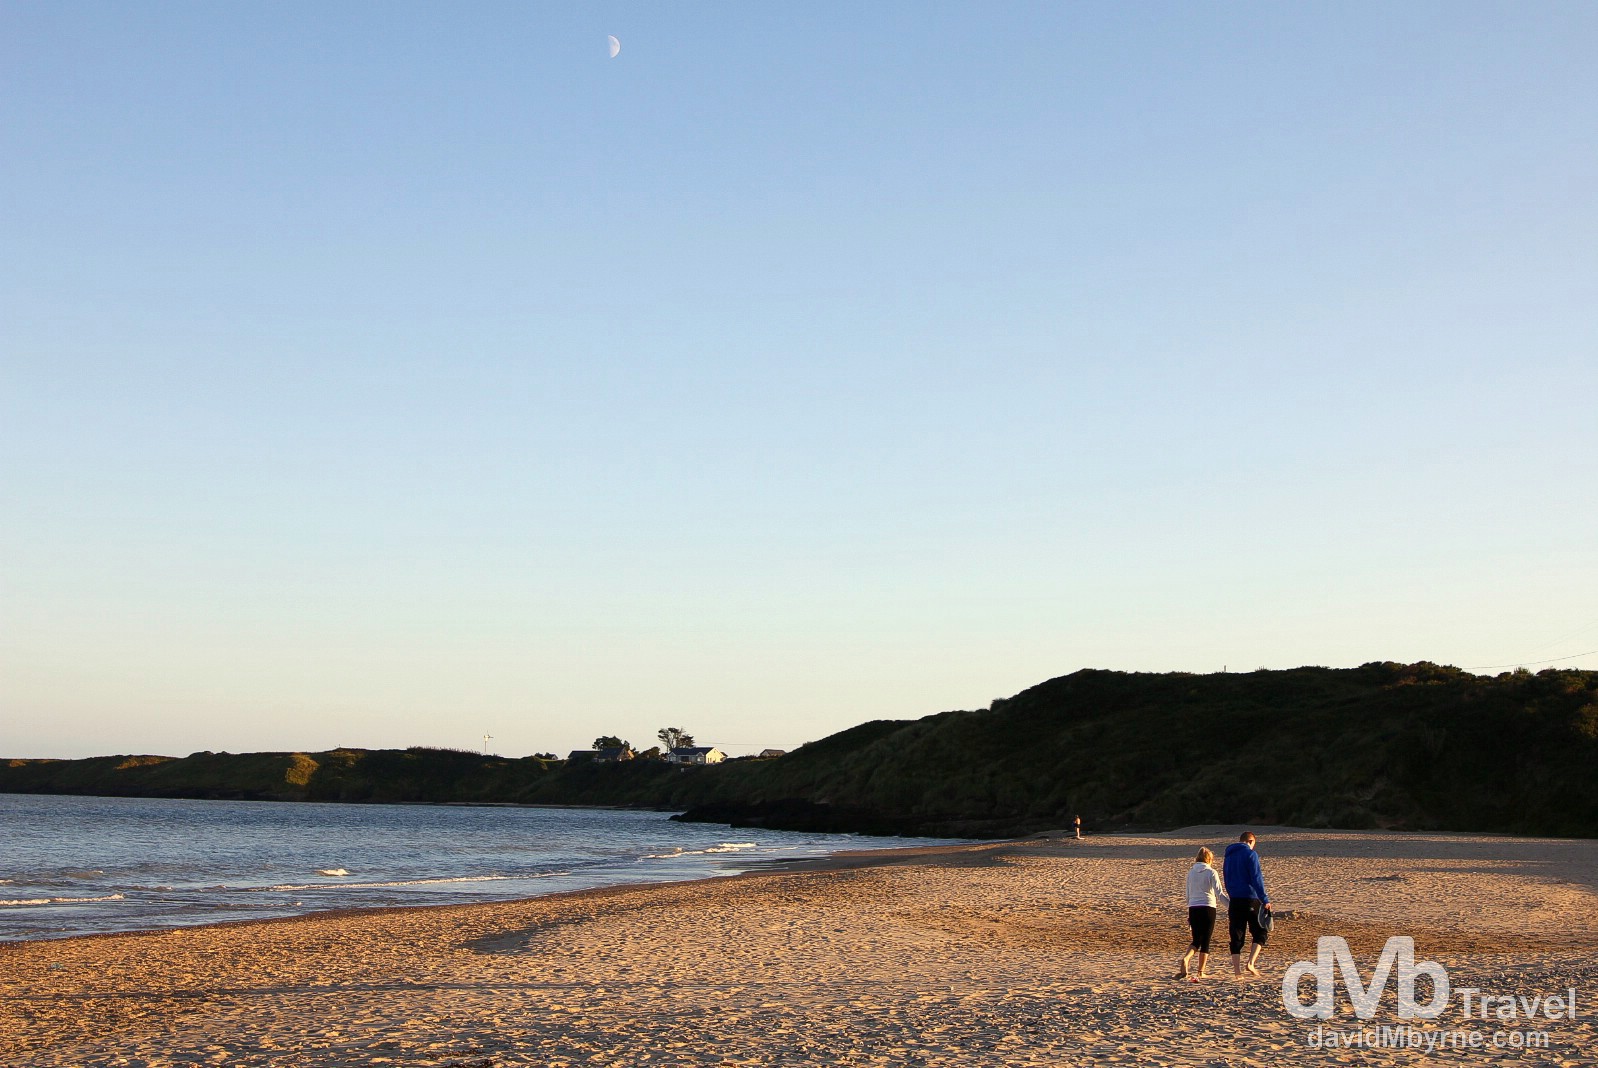 An evening stroll (& long shadows) on the beach at Brittas Bay, Co. Wicklow, Ireland. September 2, 2014.